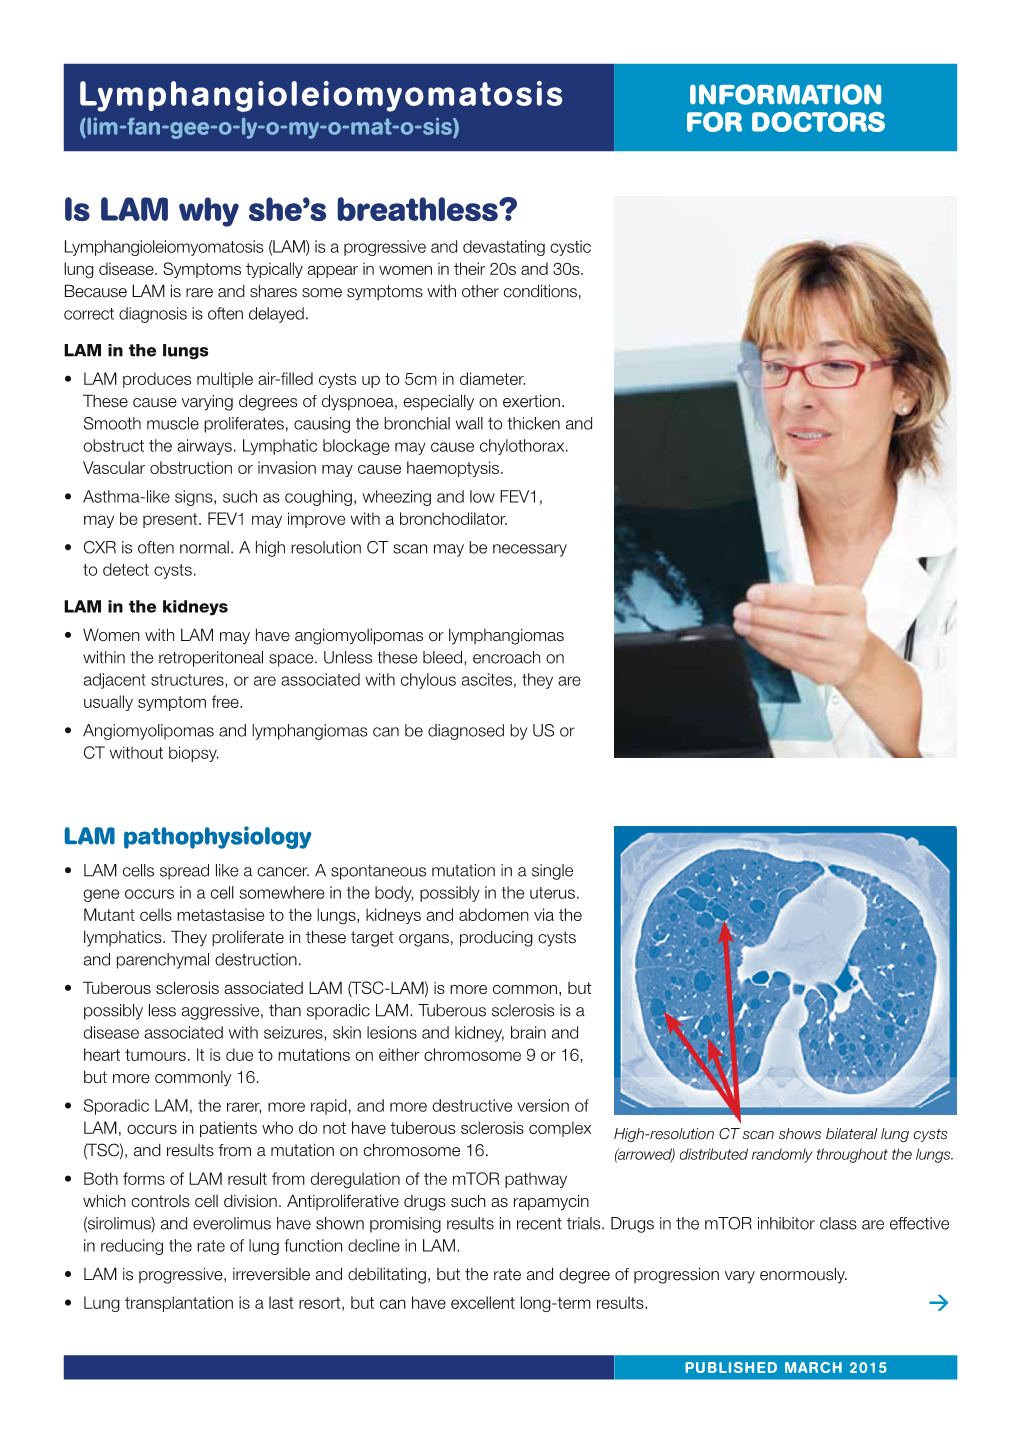 Lymphangioleiomyomatosis INFORMATION (Lim-Fan-Gee-O-Ly-O-My-O-Mat-O-Sis) for DOCTORS